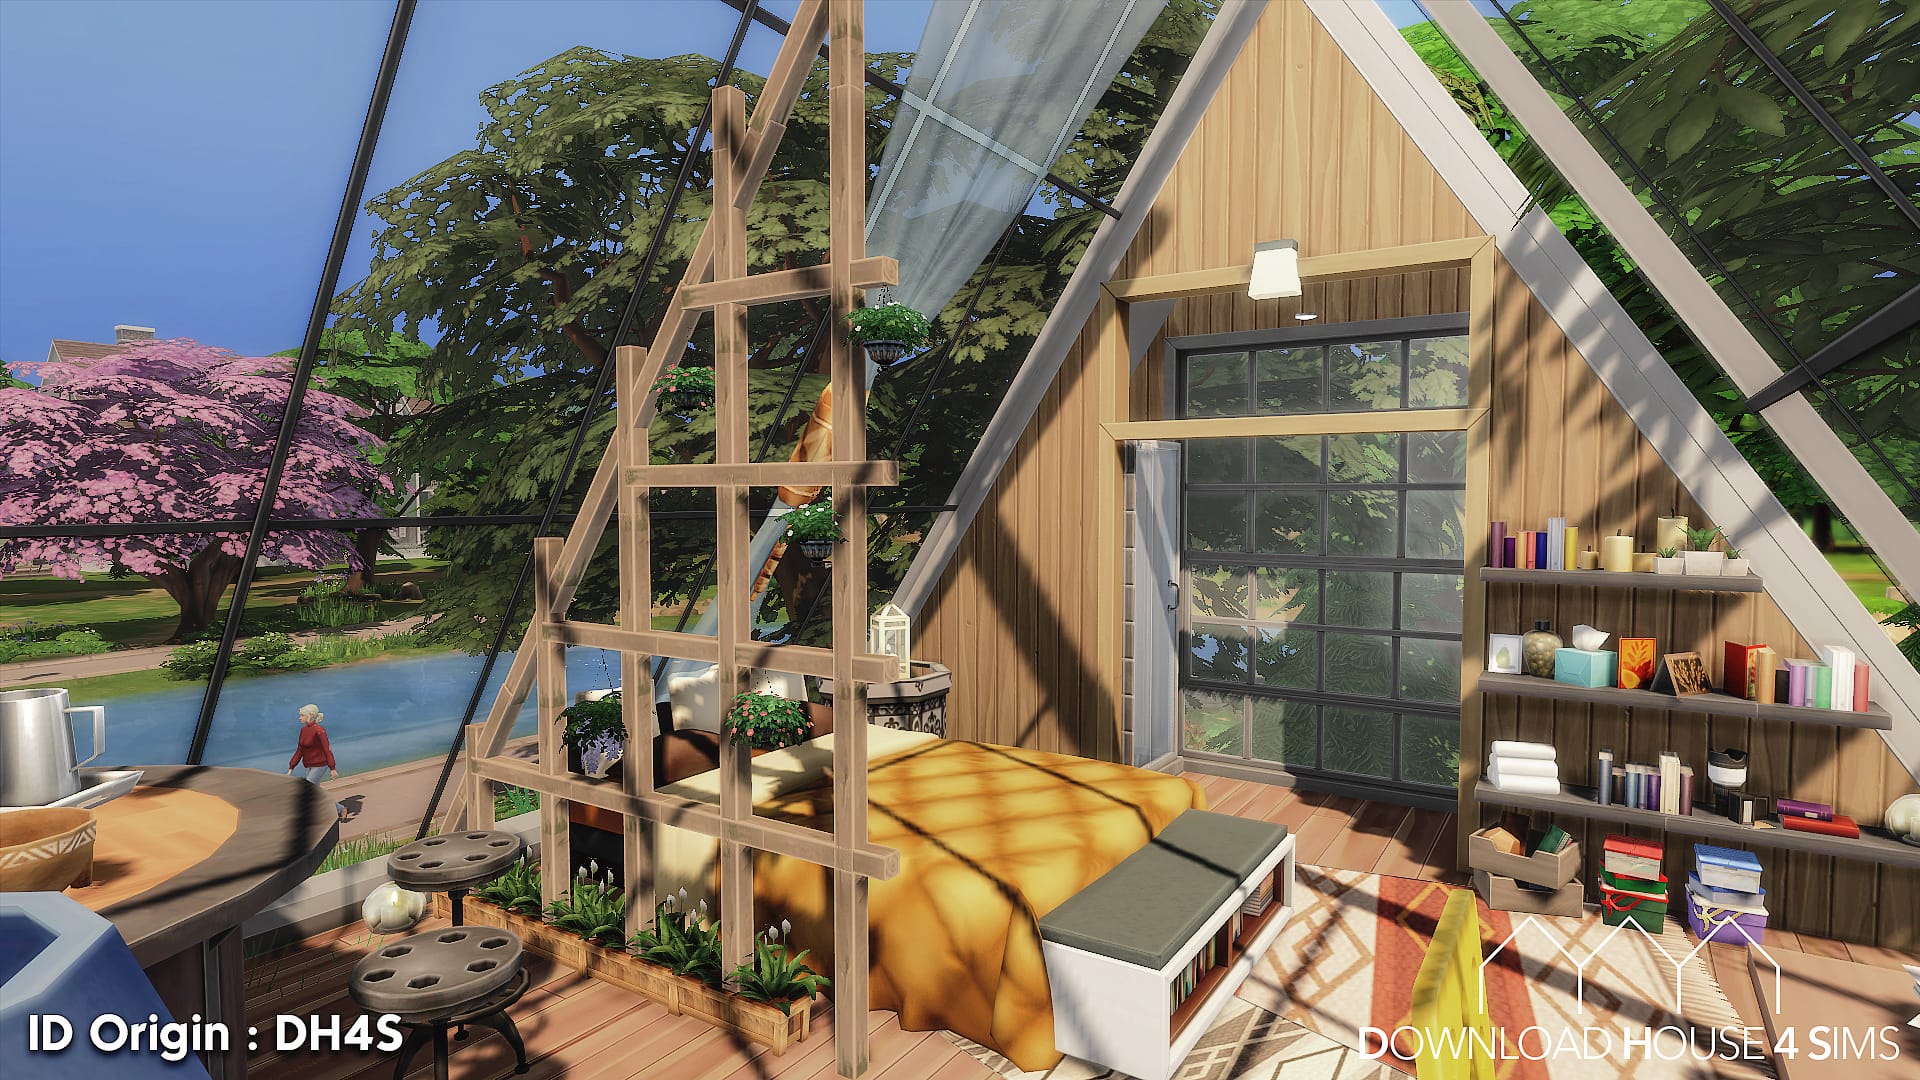 A-Frame Eco Tiny Home - Maisons - Download house 4 sims